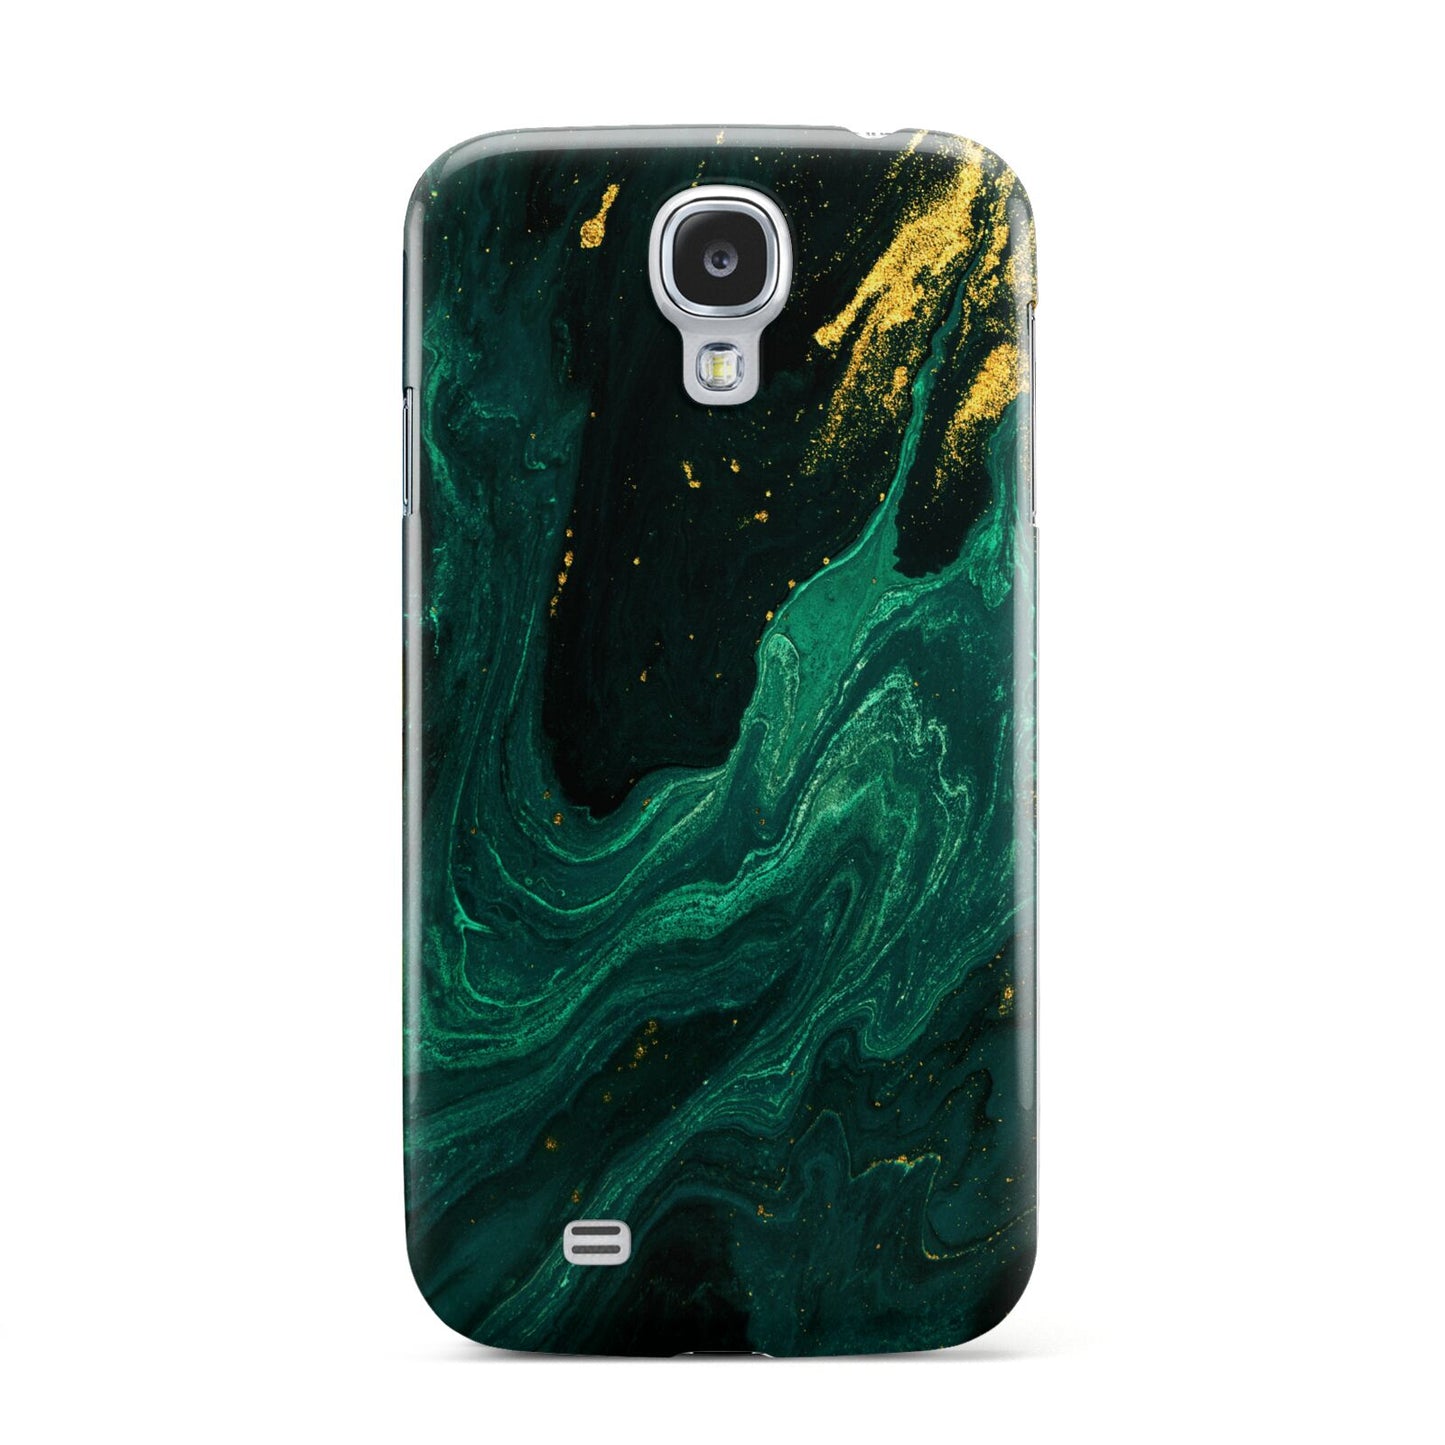 Emerald Green Samsung Galaxy S4 Case